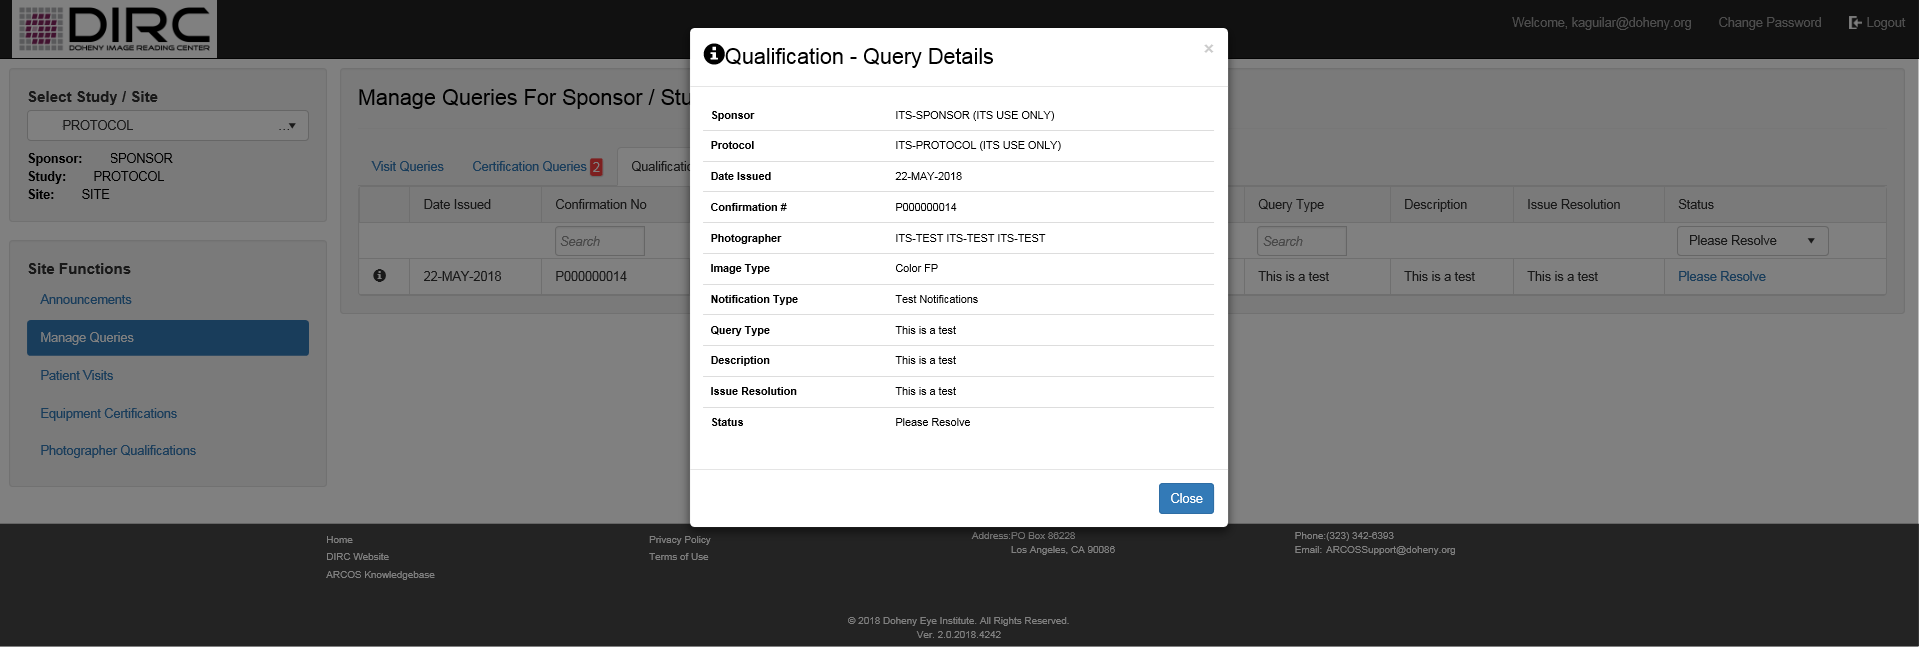 qualification-query-details